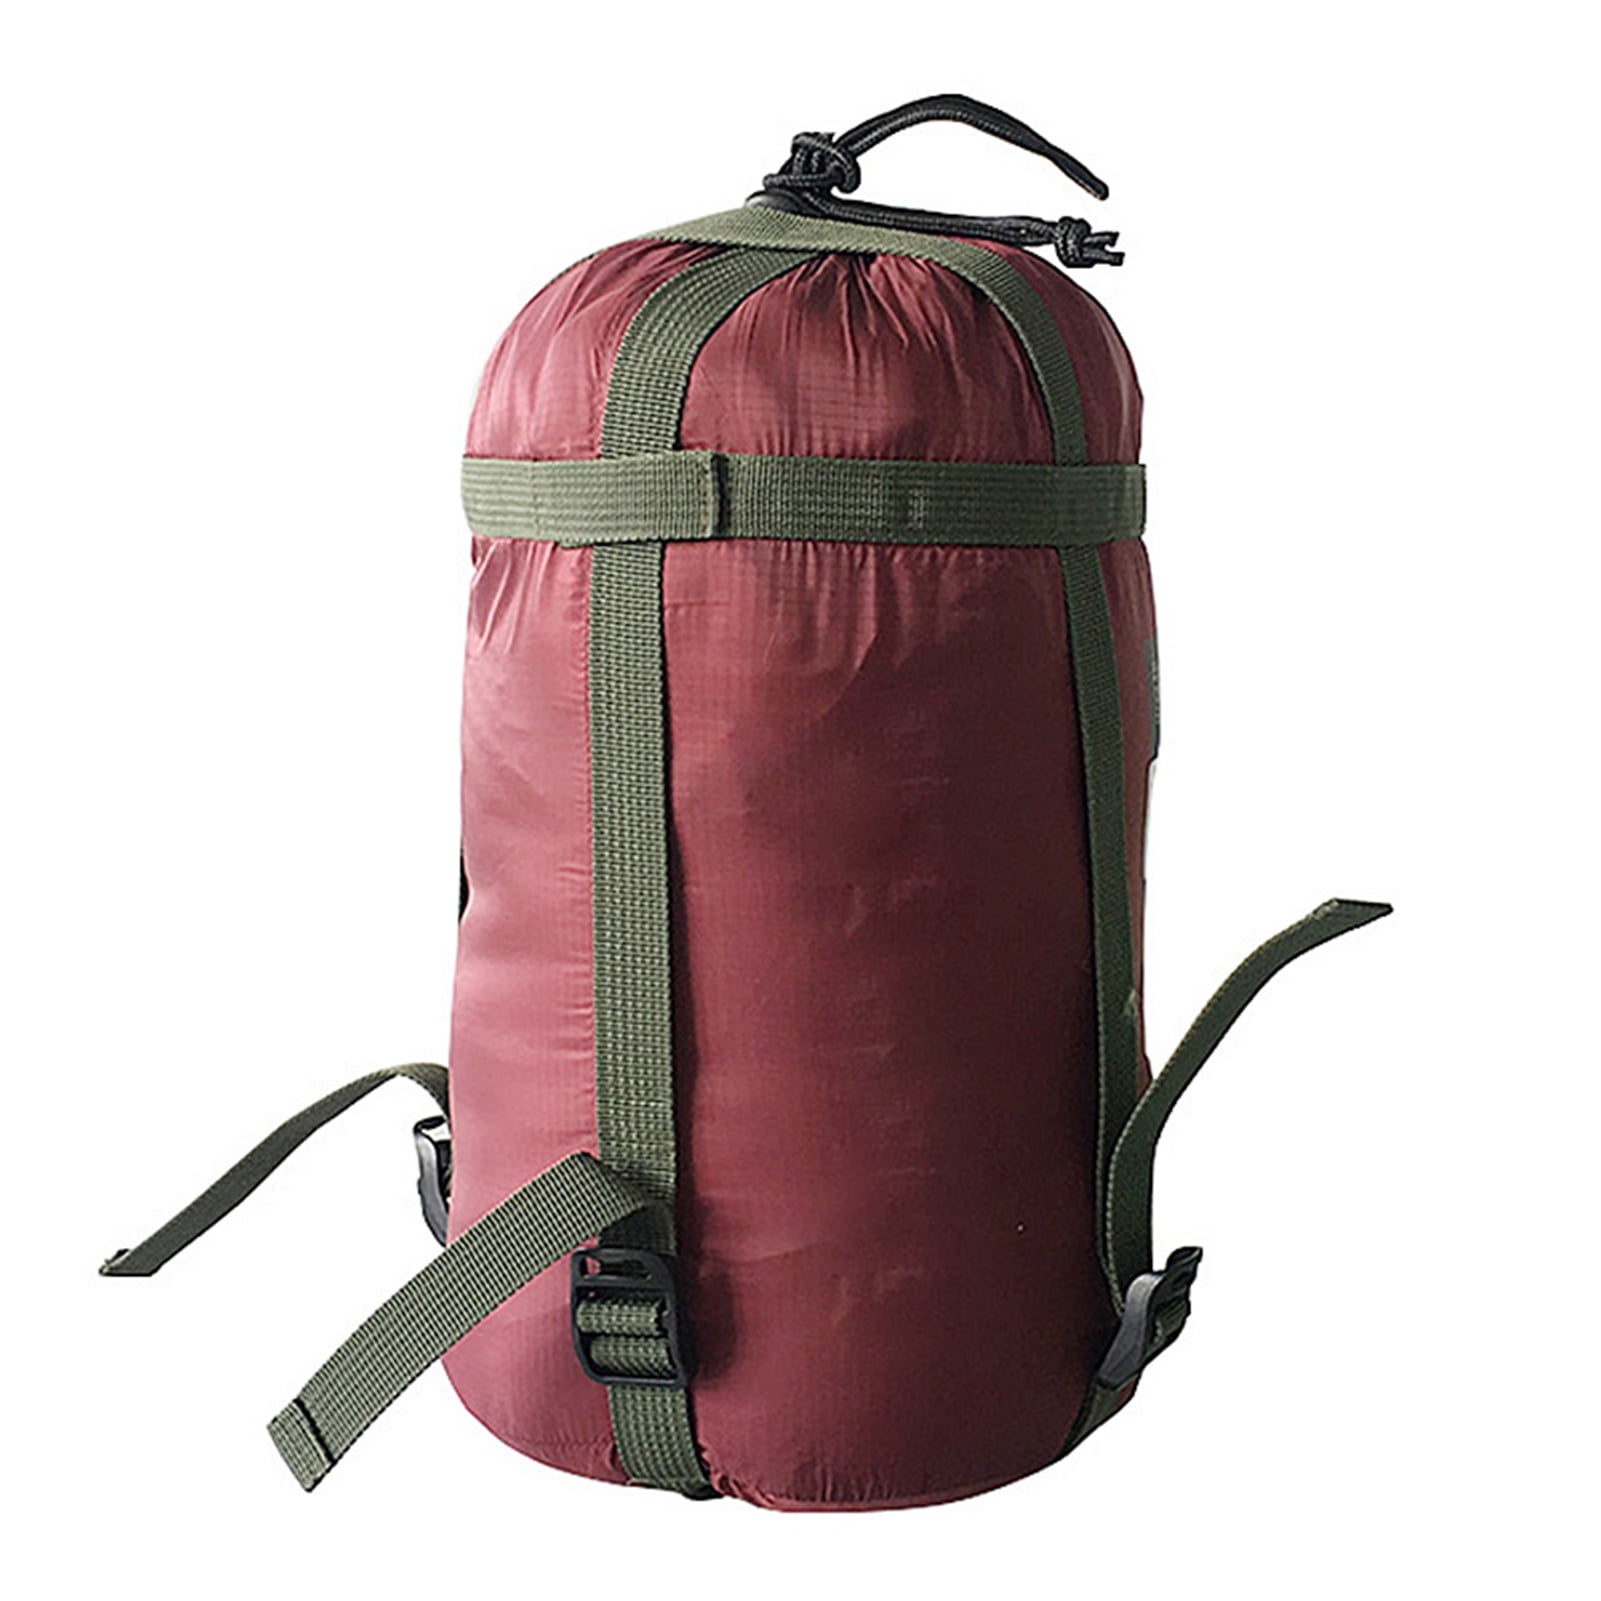 Lainrrew Compression Stuff Sack, 24L Waterproof Sleeping Bag Storage Stuff  Sack for Camping Hiking Travel